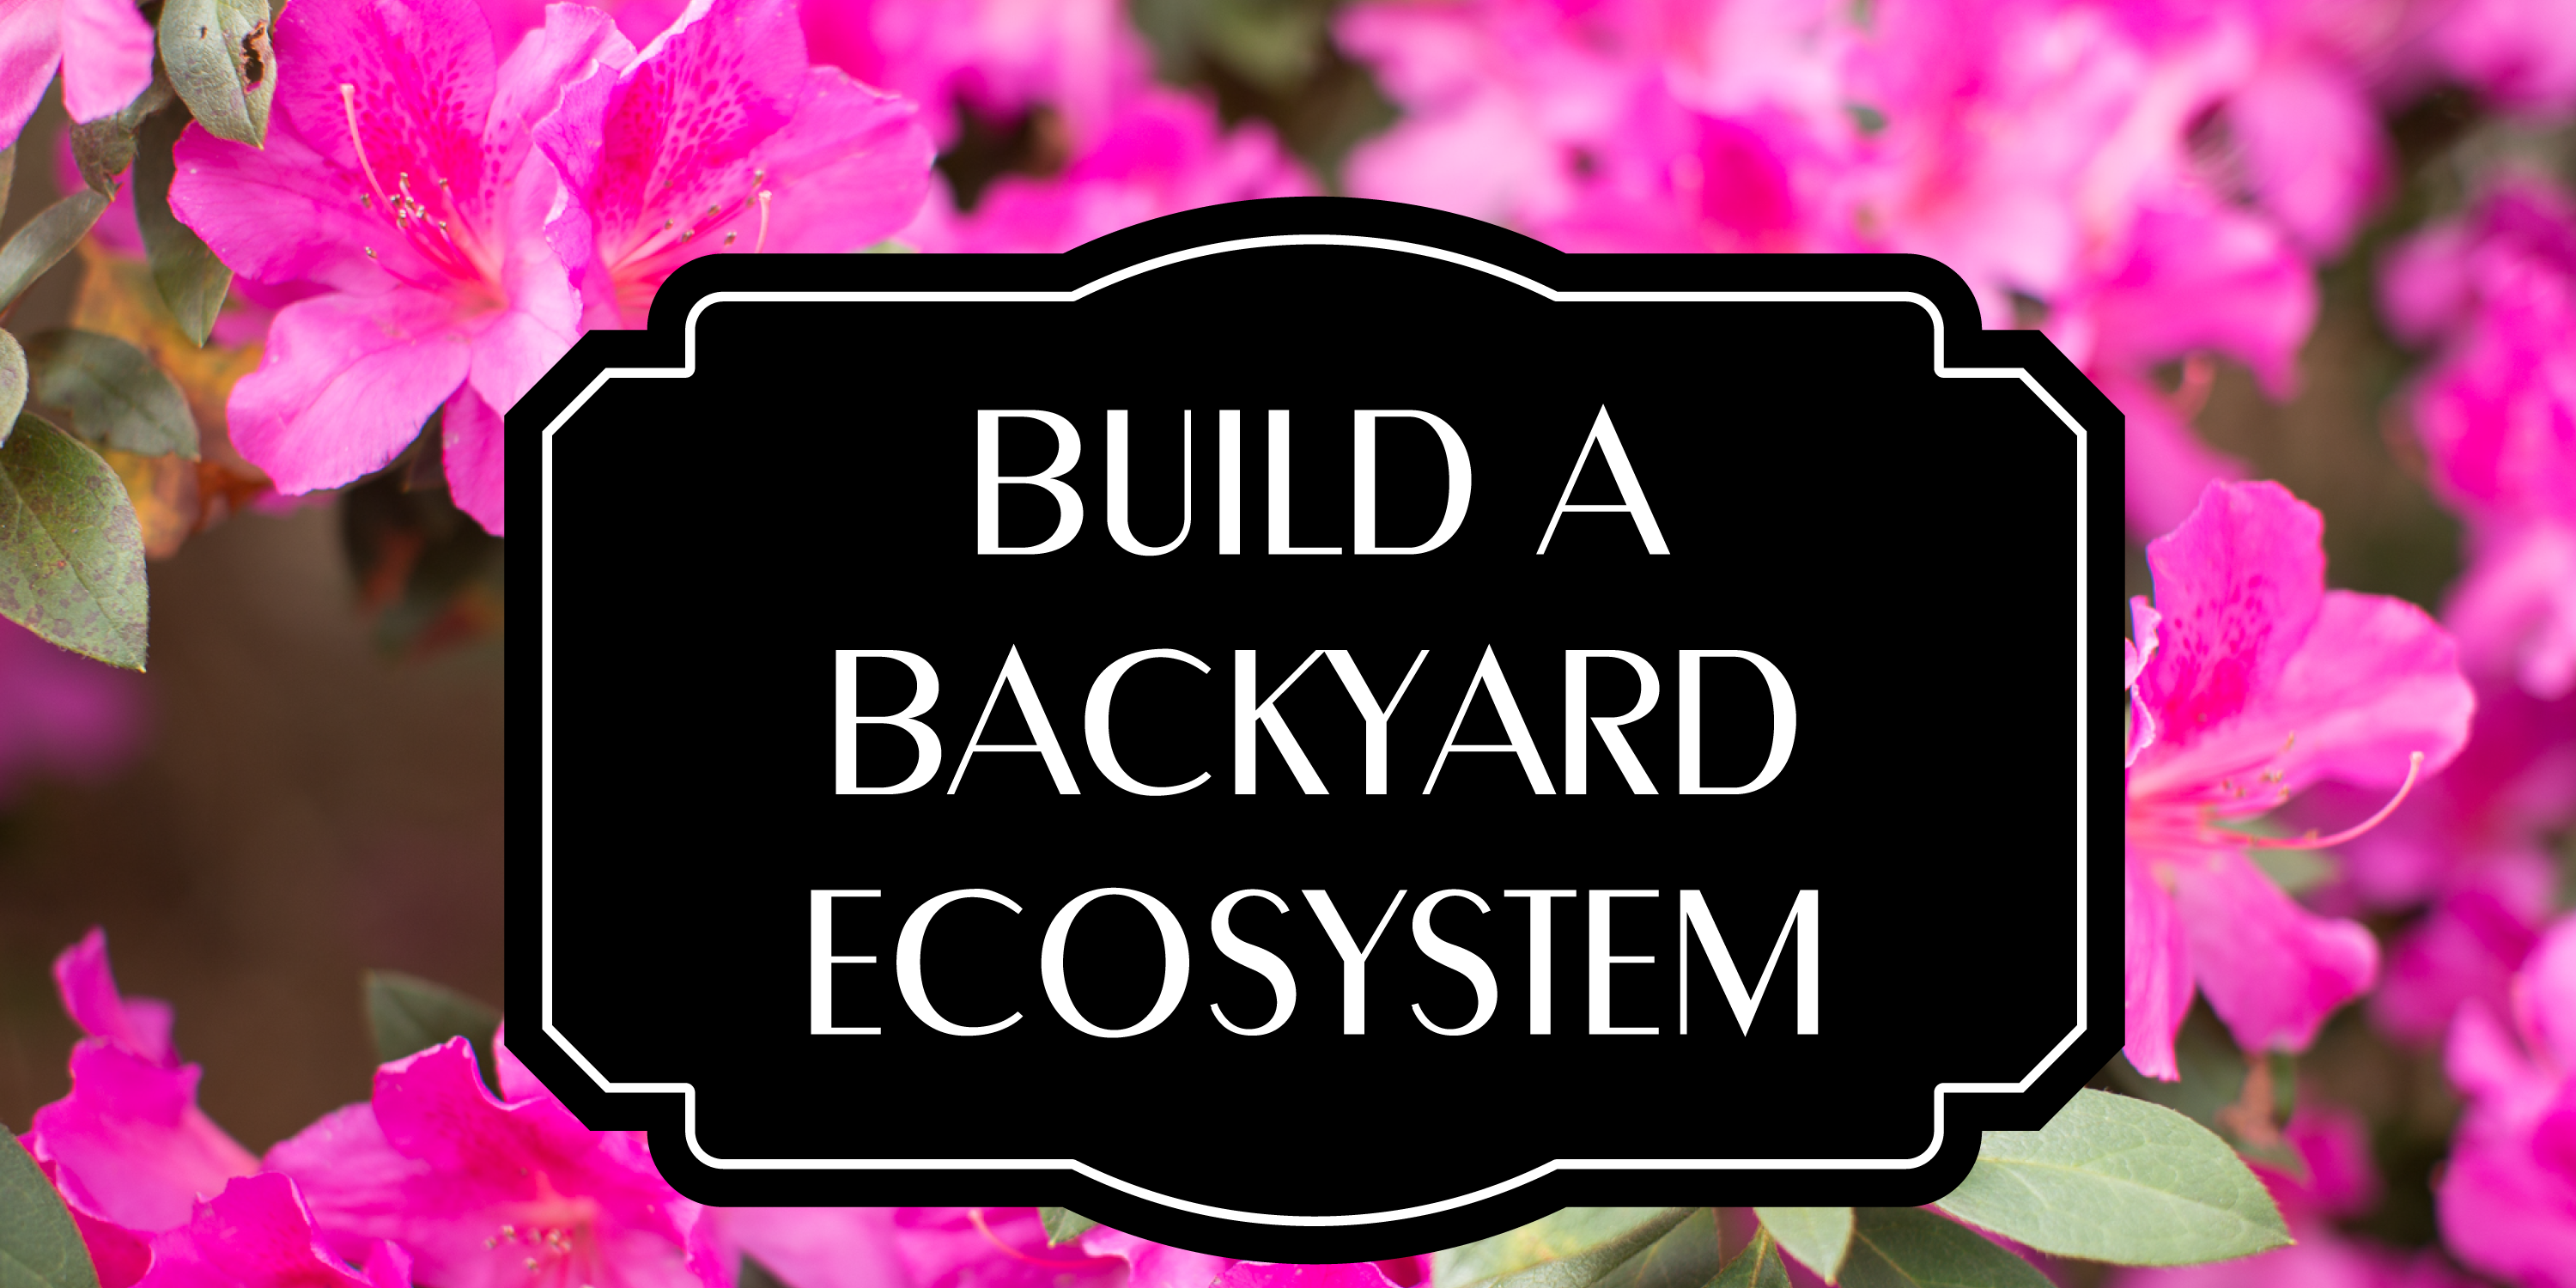 Build a Backyard Ecosystem